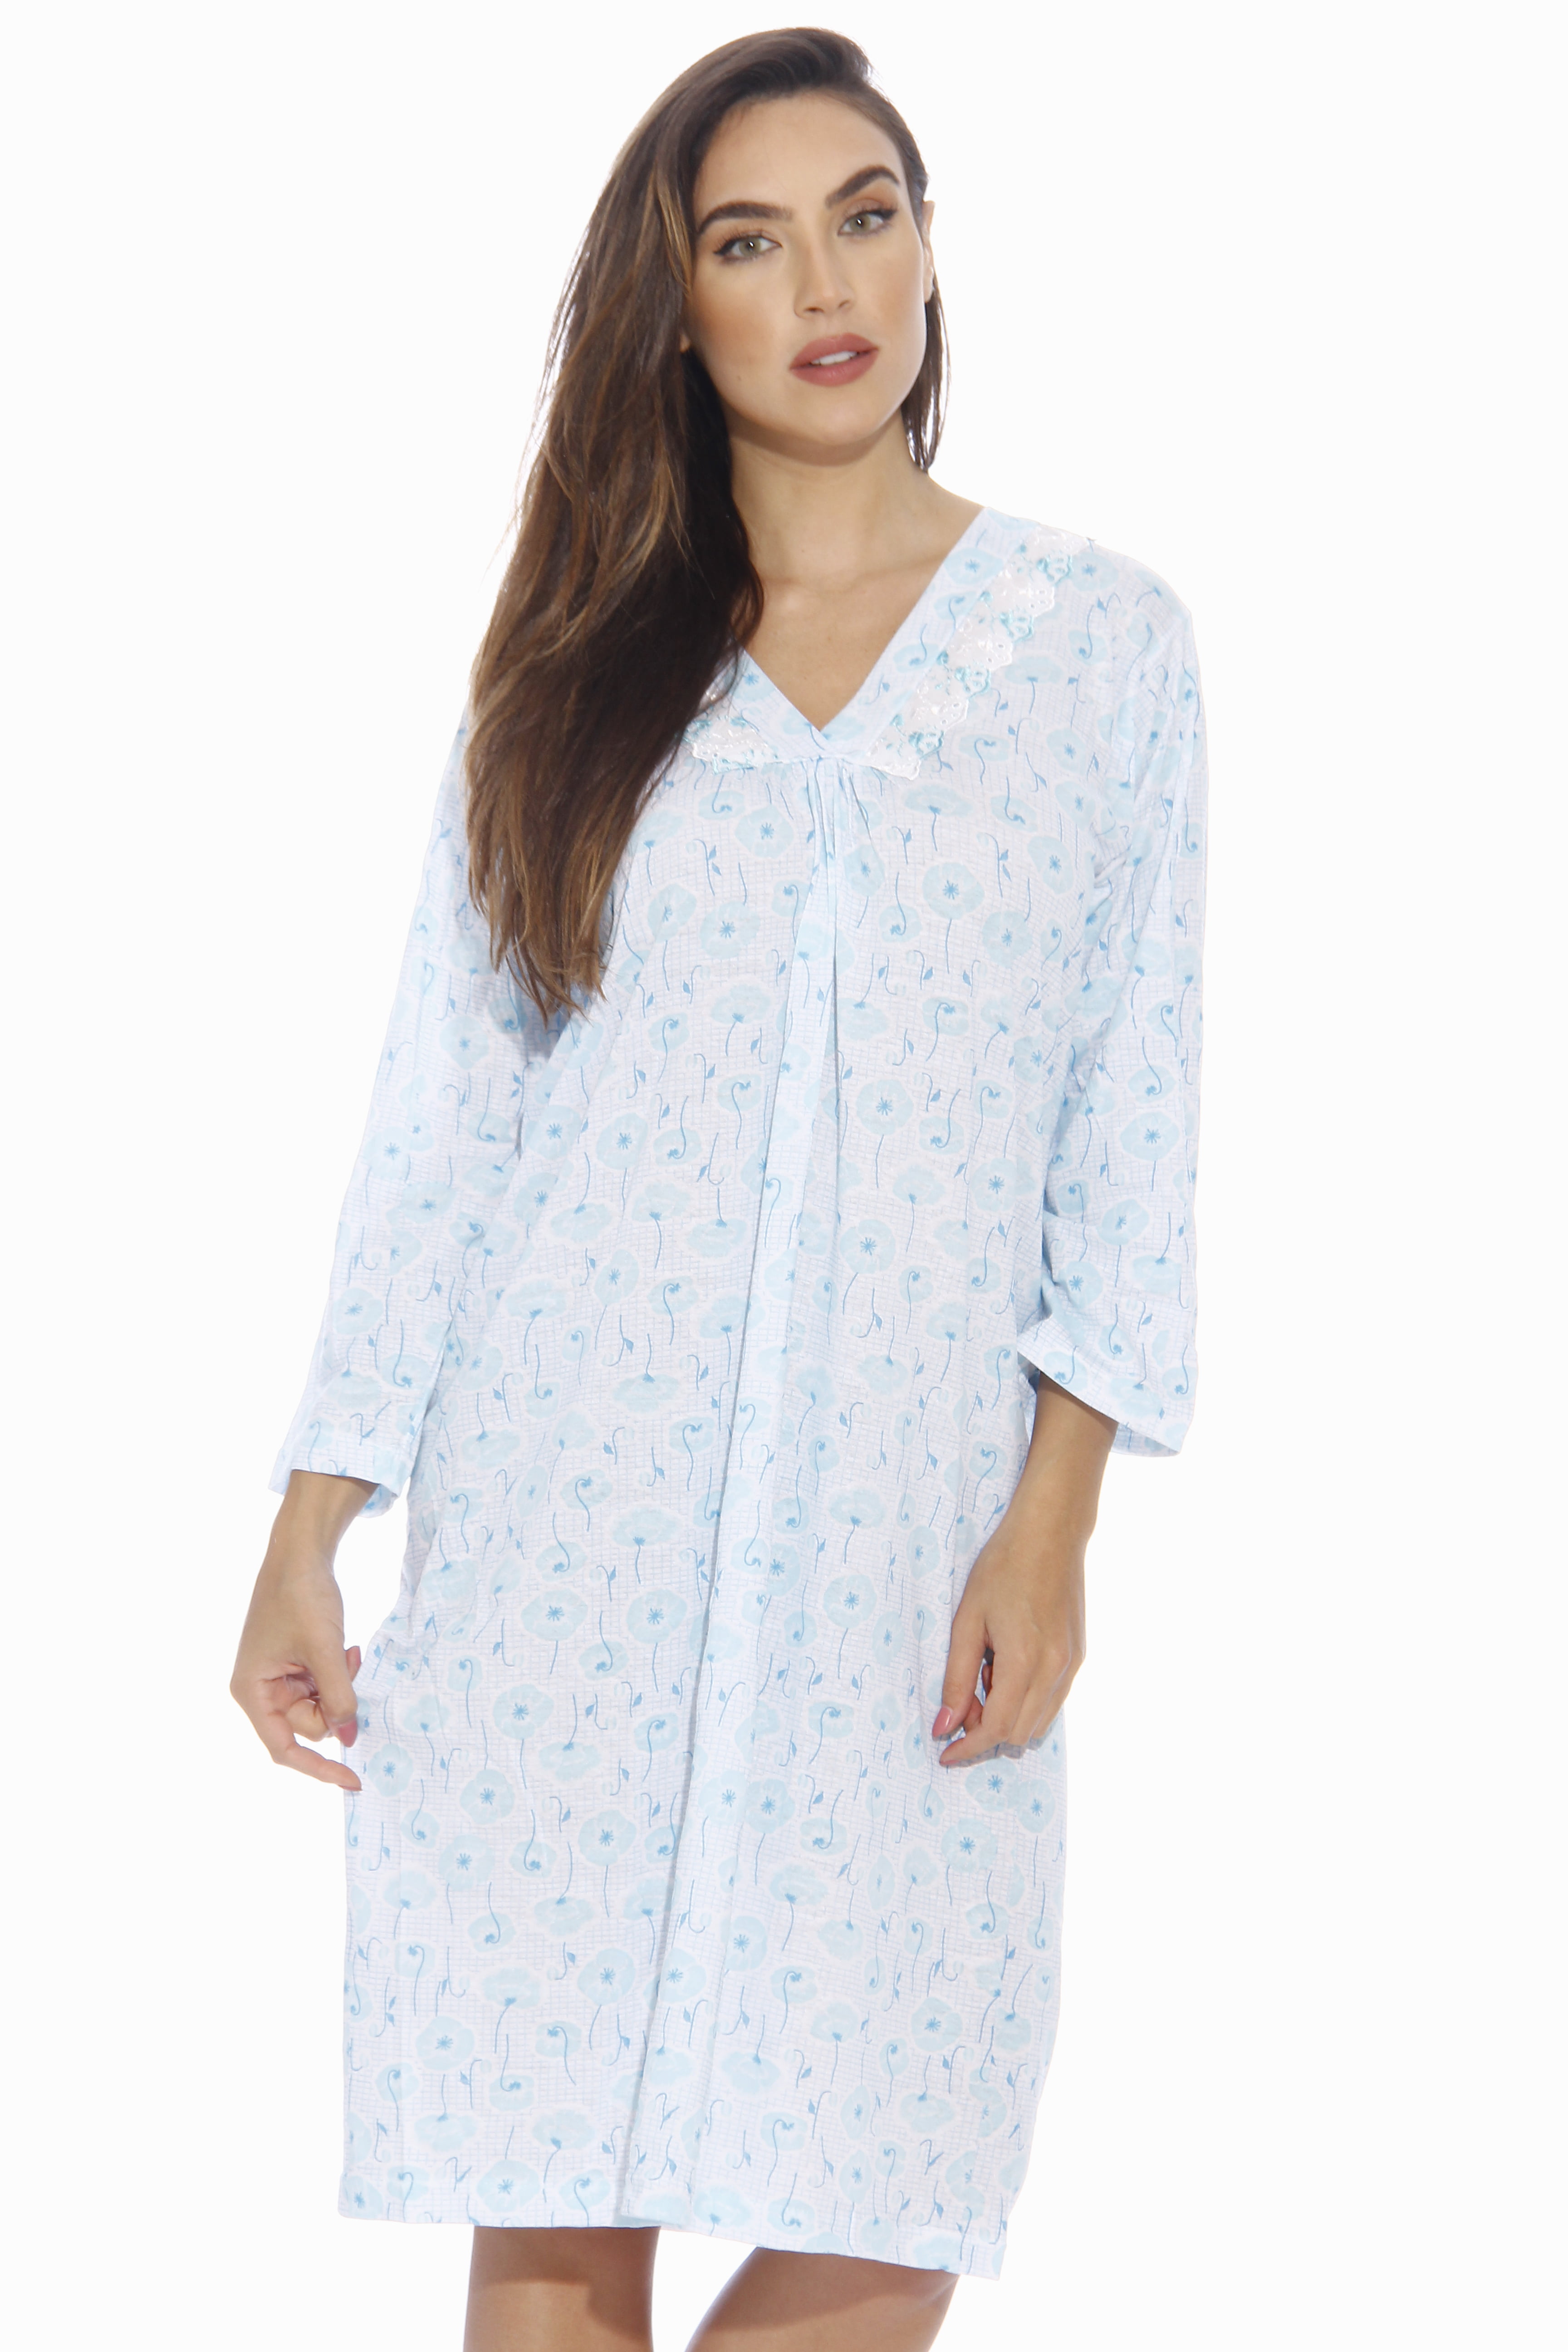 Just Love - Just Love Nightgown / Women Sleepwear / Womans Pajamas ...